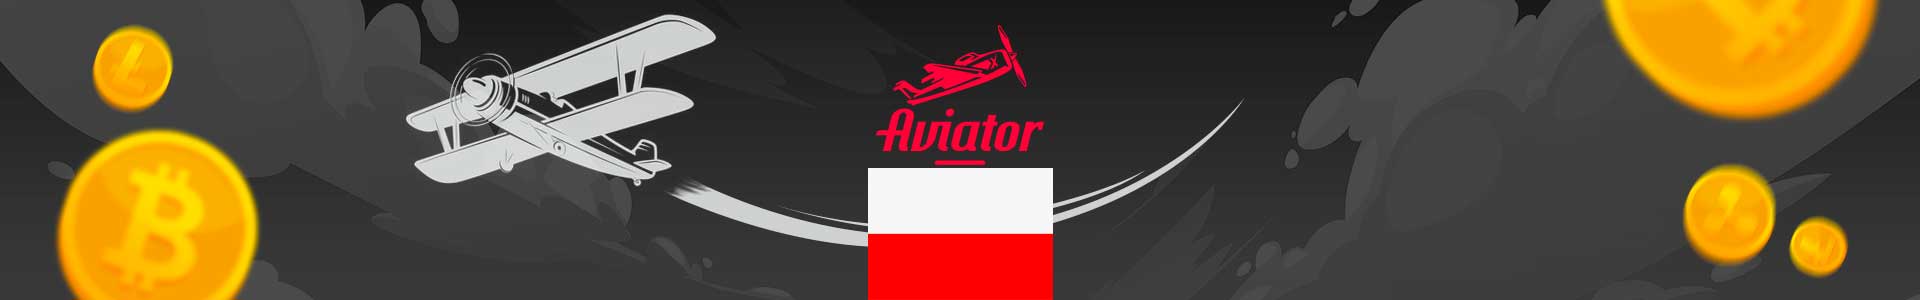 Aviator bonus game in Poland